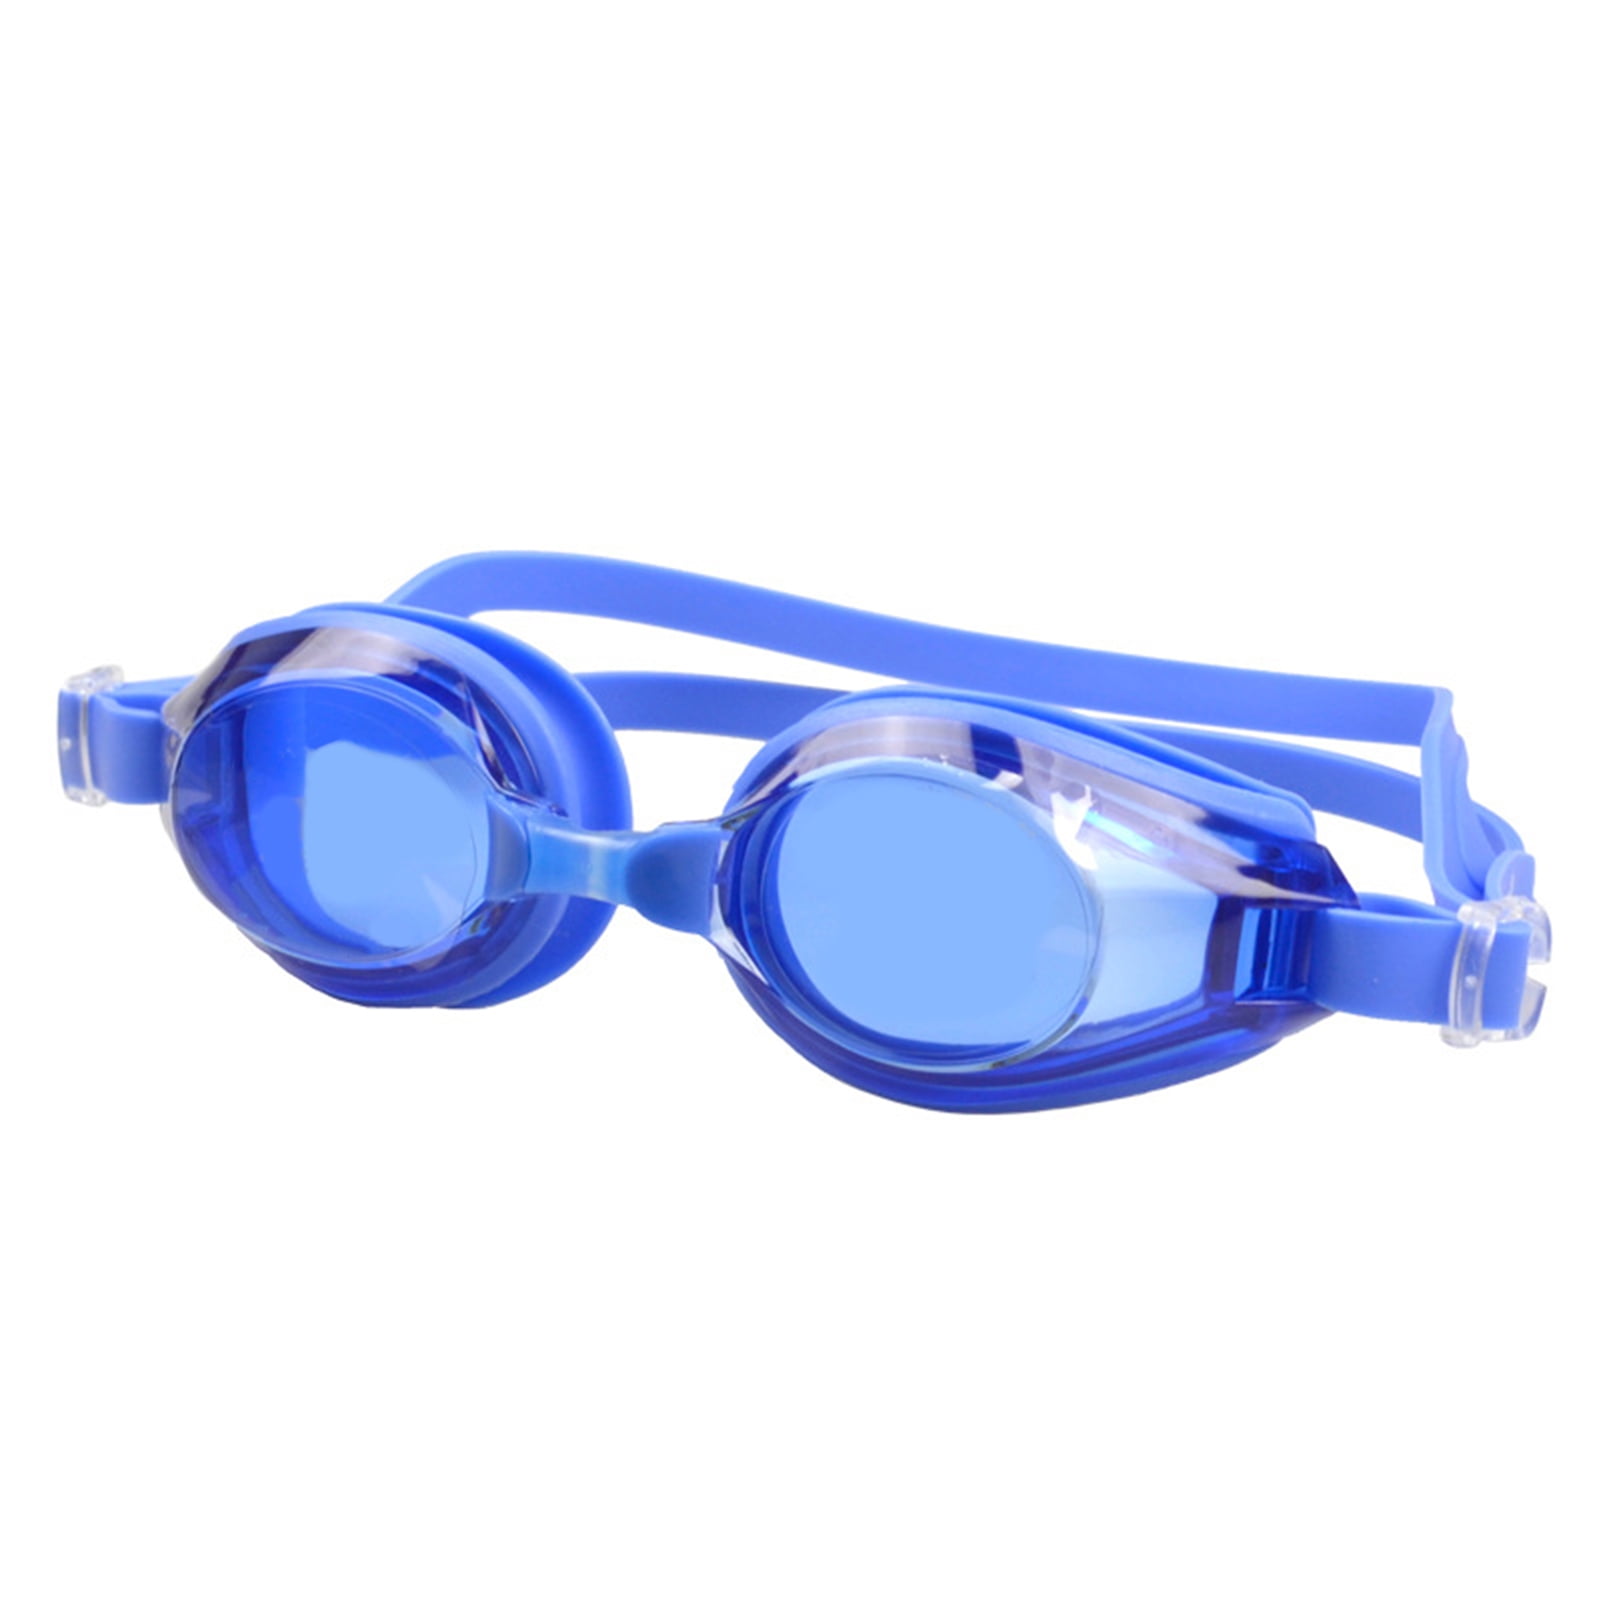 Unisex Adult Anti-fog Swimming Goggles Waterproof Durable Swimming Glasses 